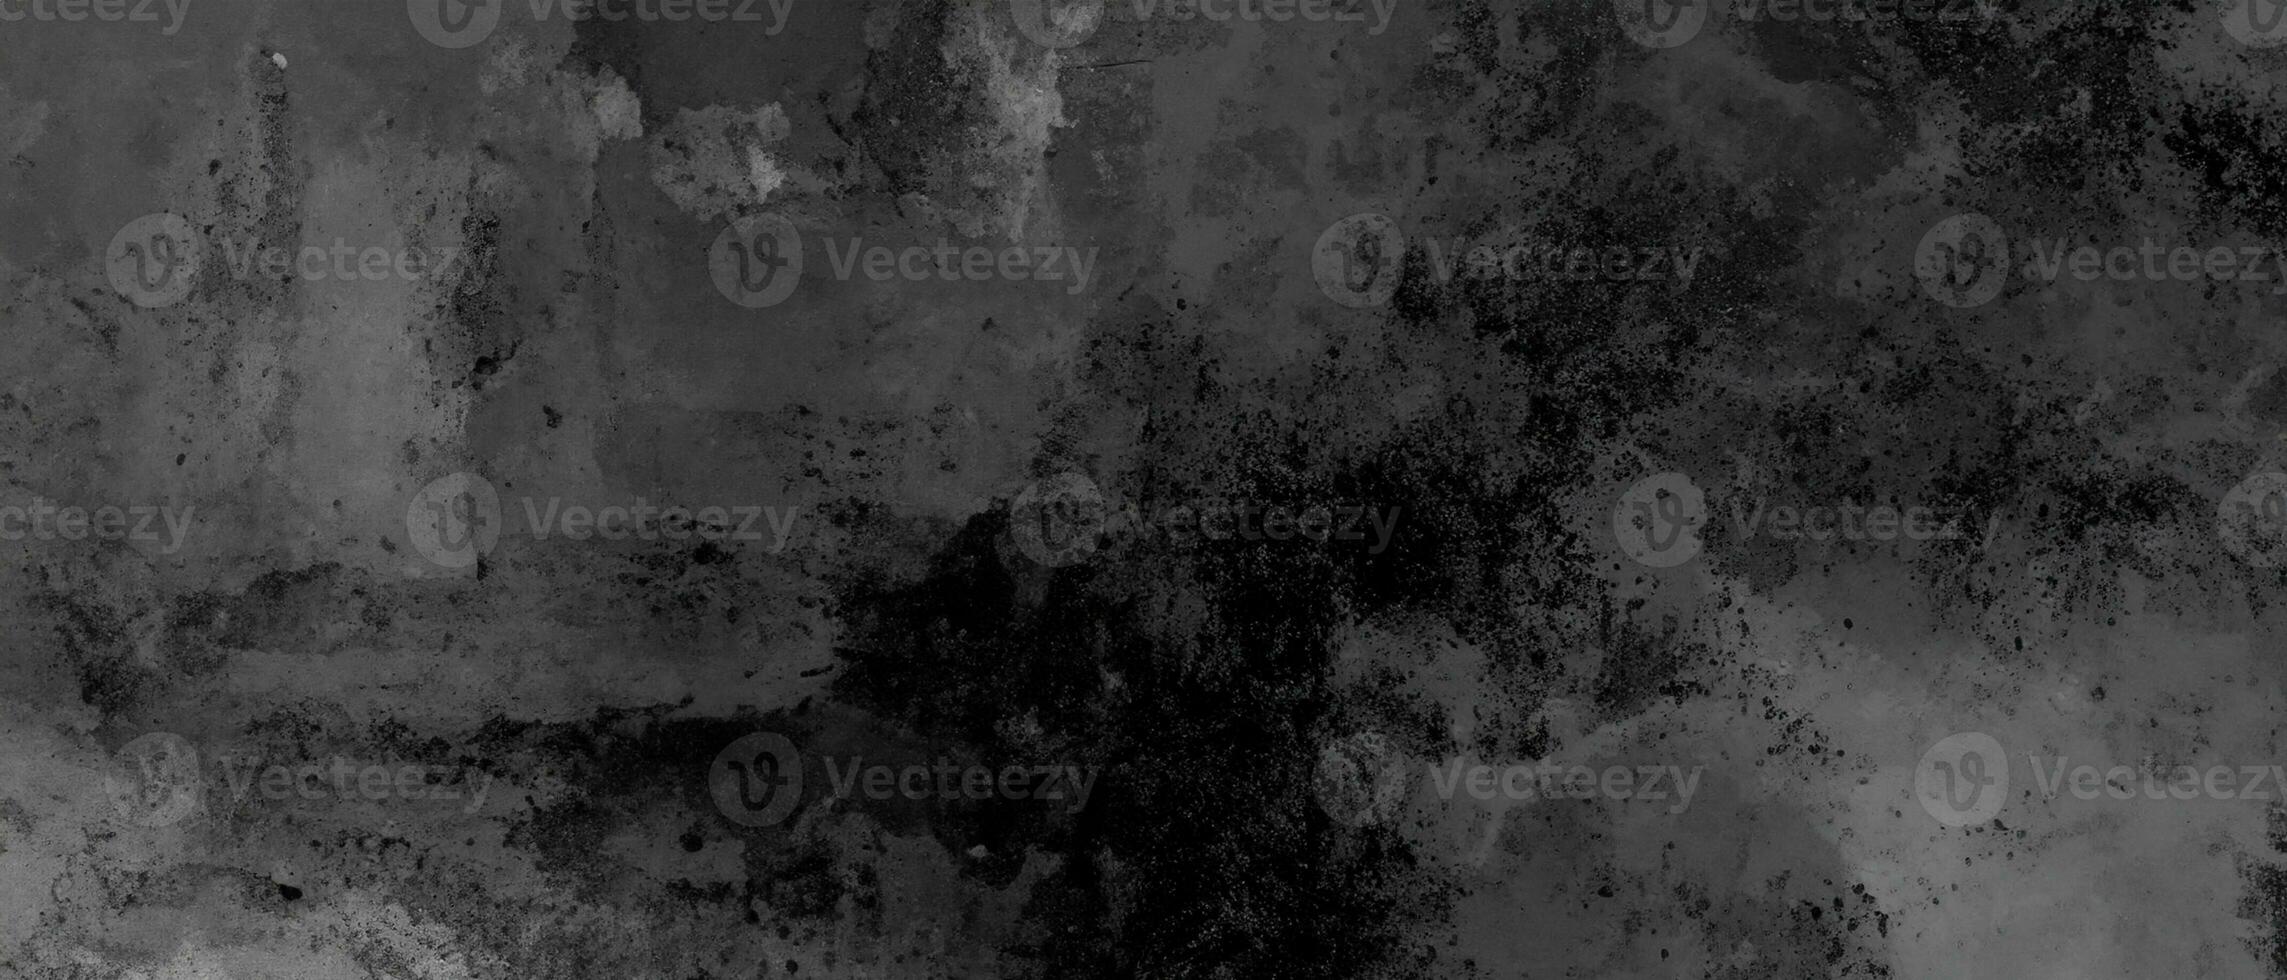 negro fondo, pizarra textura para sitio web antecedentes, antiguo Clásico salpicado acuarela pintado papel o texturizado antiguo pared con afligido abigarrado grunge foto